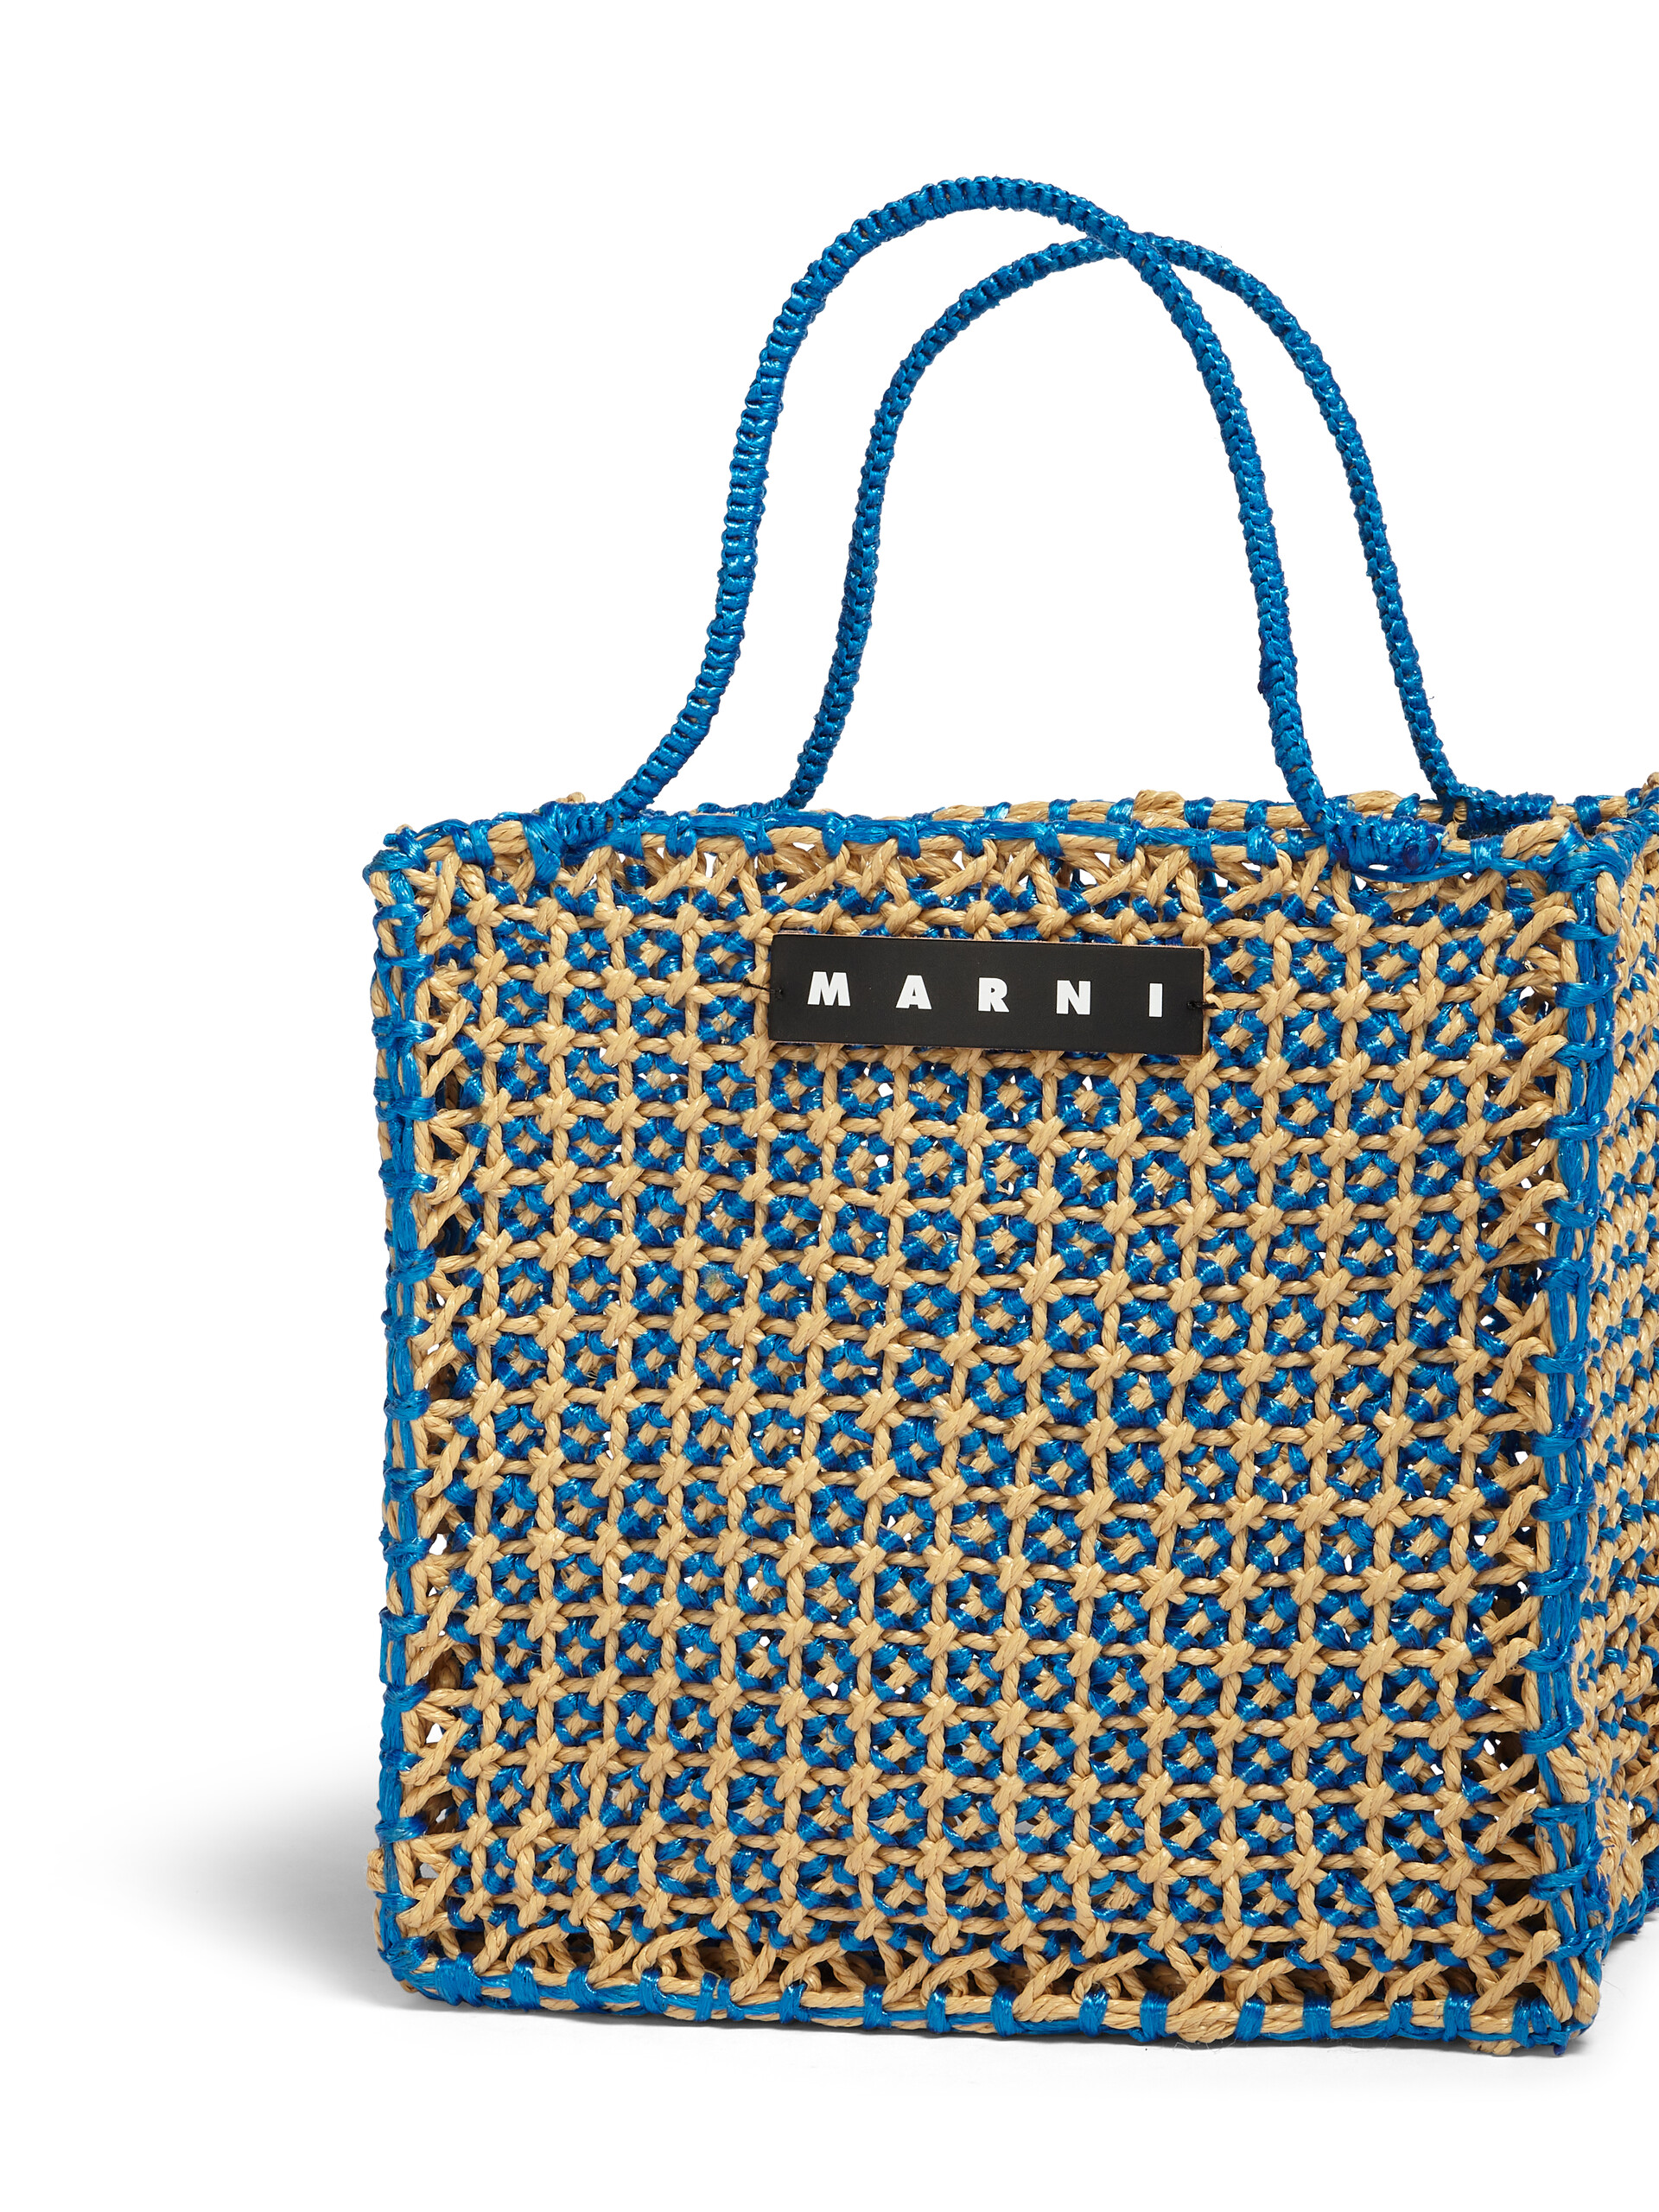 MARNI MARKET JURTA large bag in pale blue and beige crochet